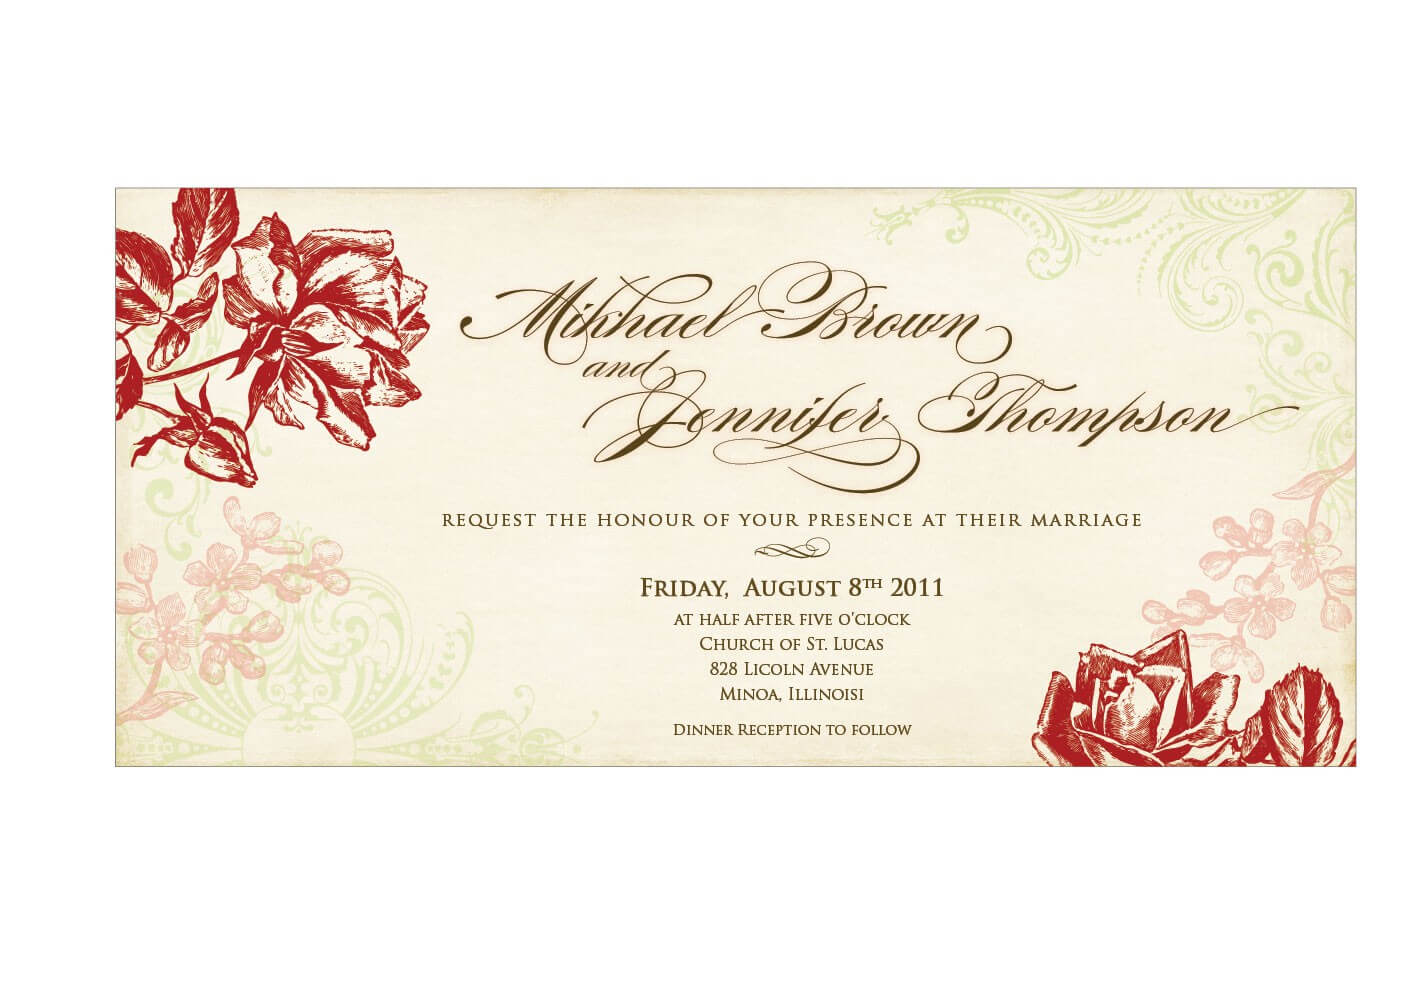 19 Wedding Invitation Cards Templates Designs Images Pertaining To Sample Wedding Invitation Cards Templates